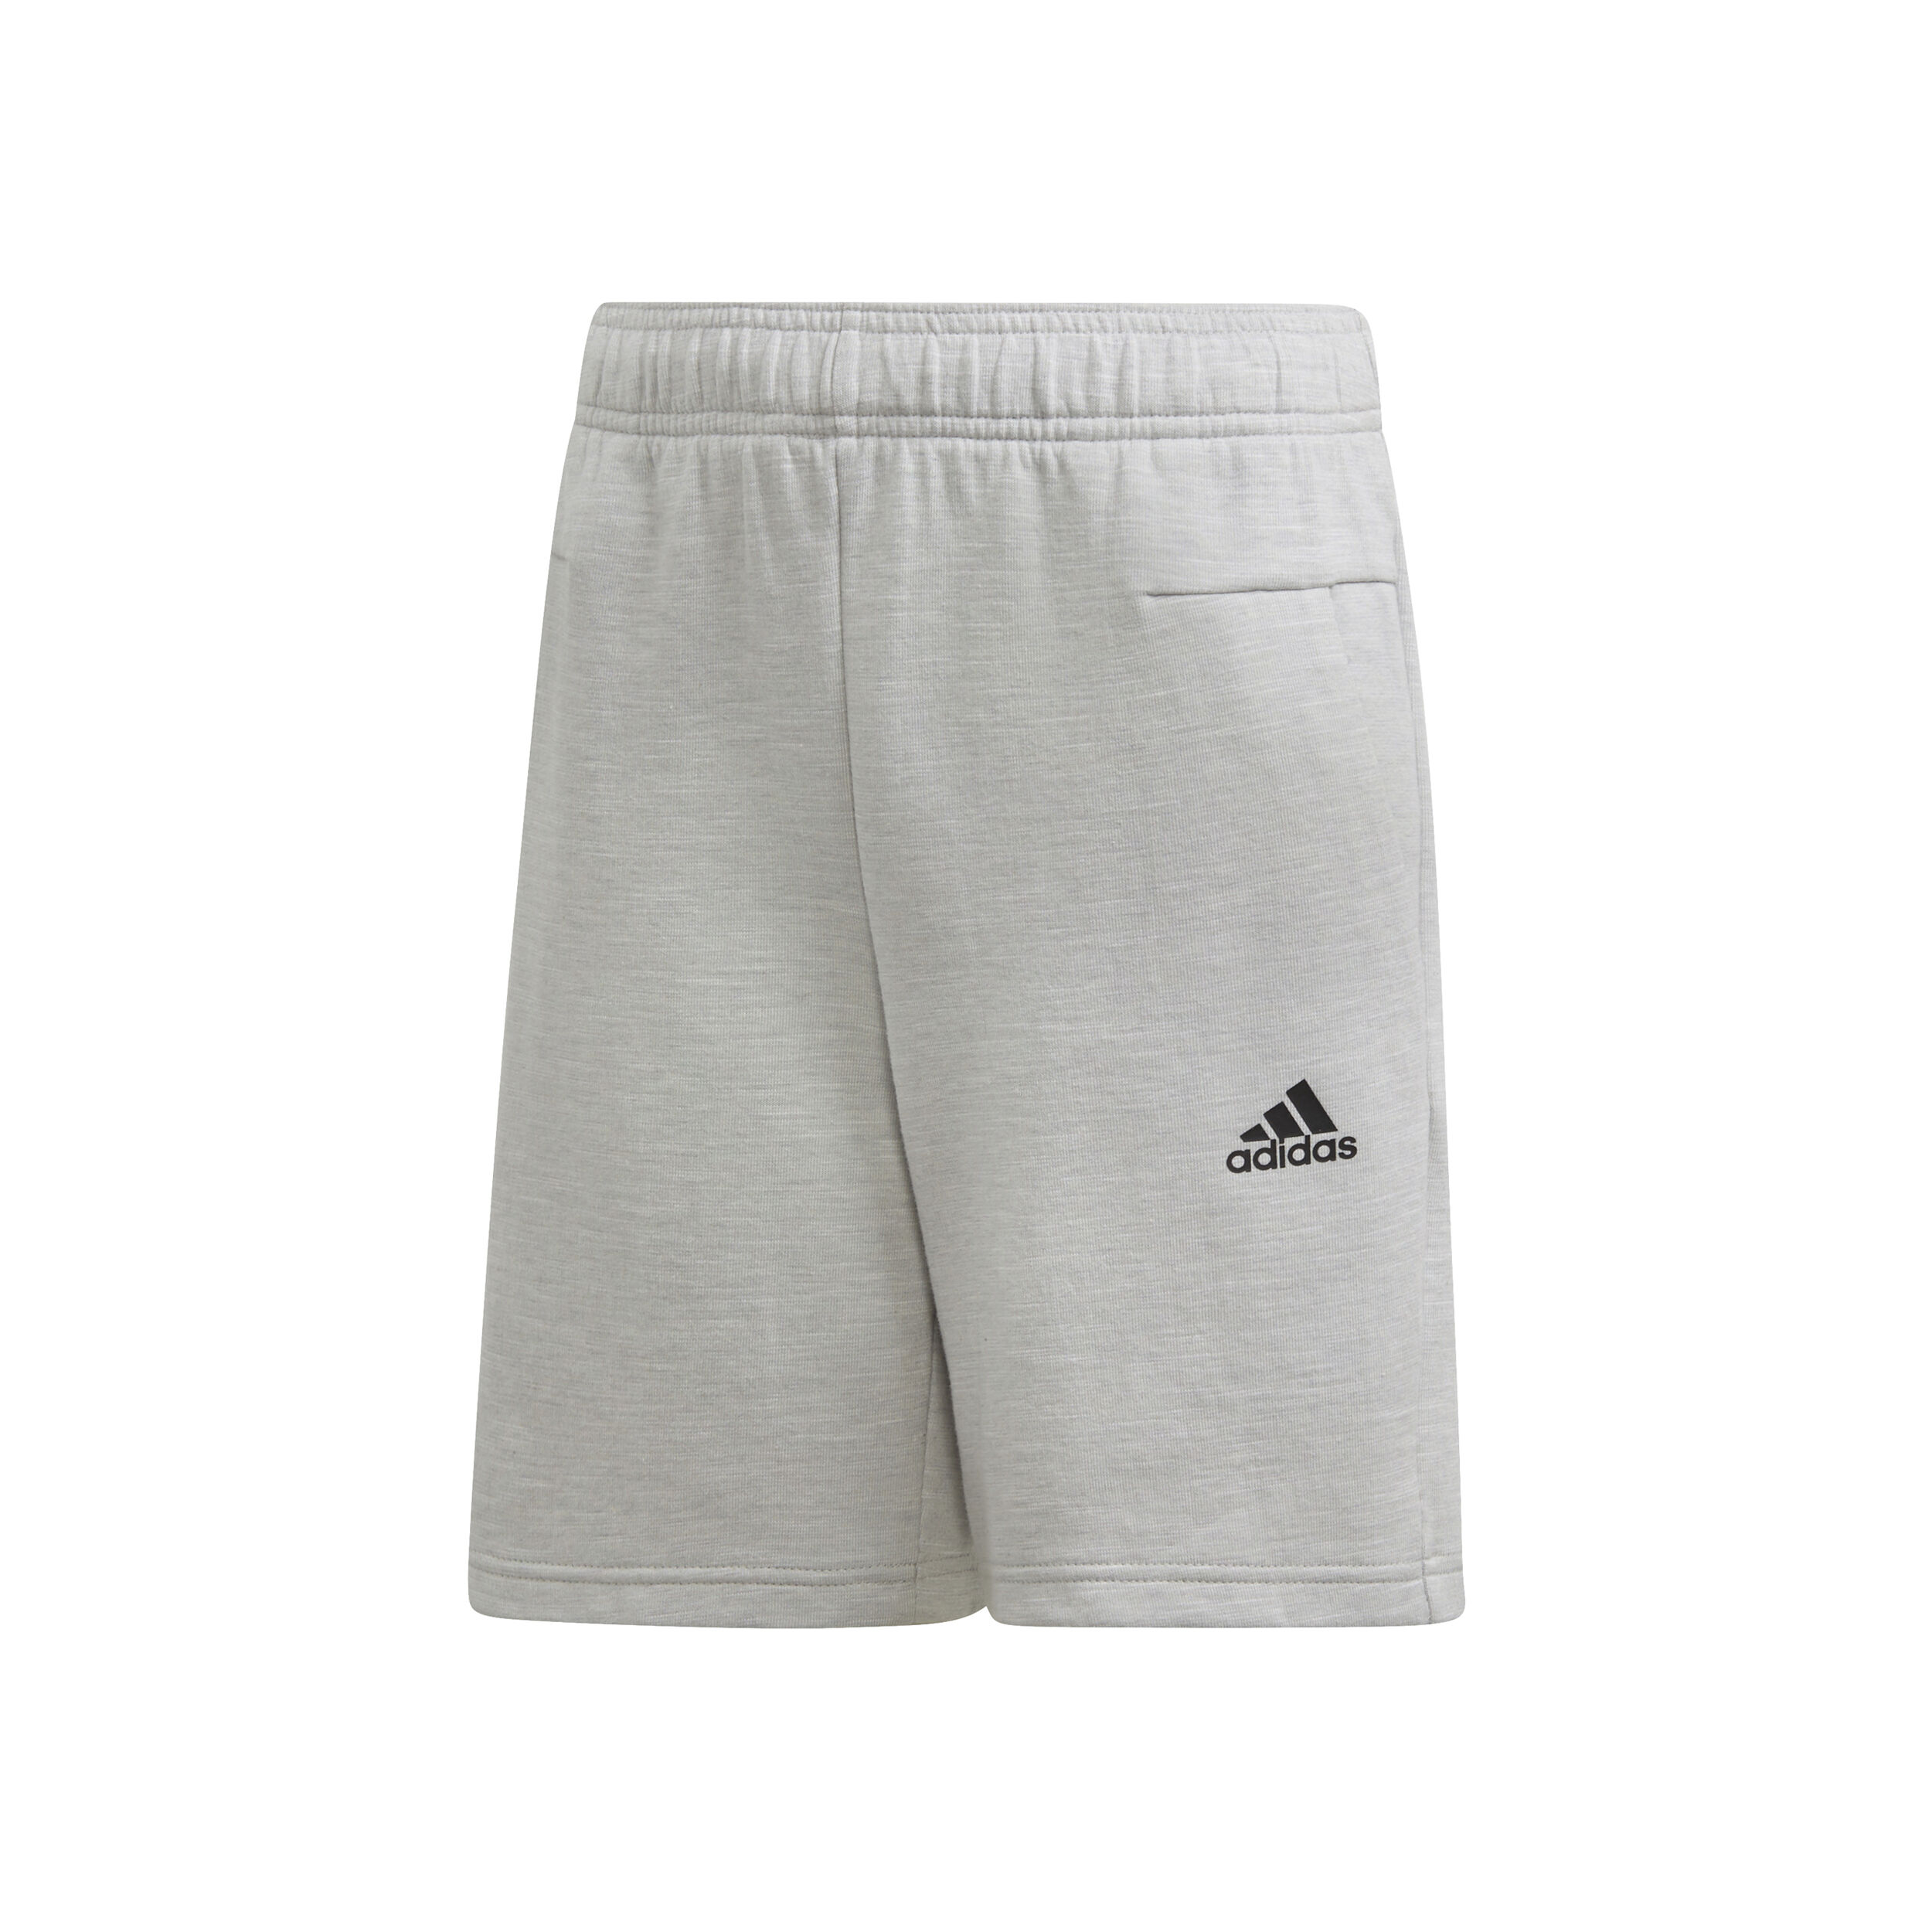 adidas id stadium shorts